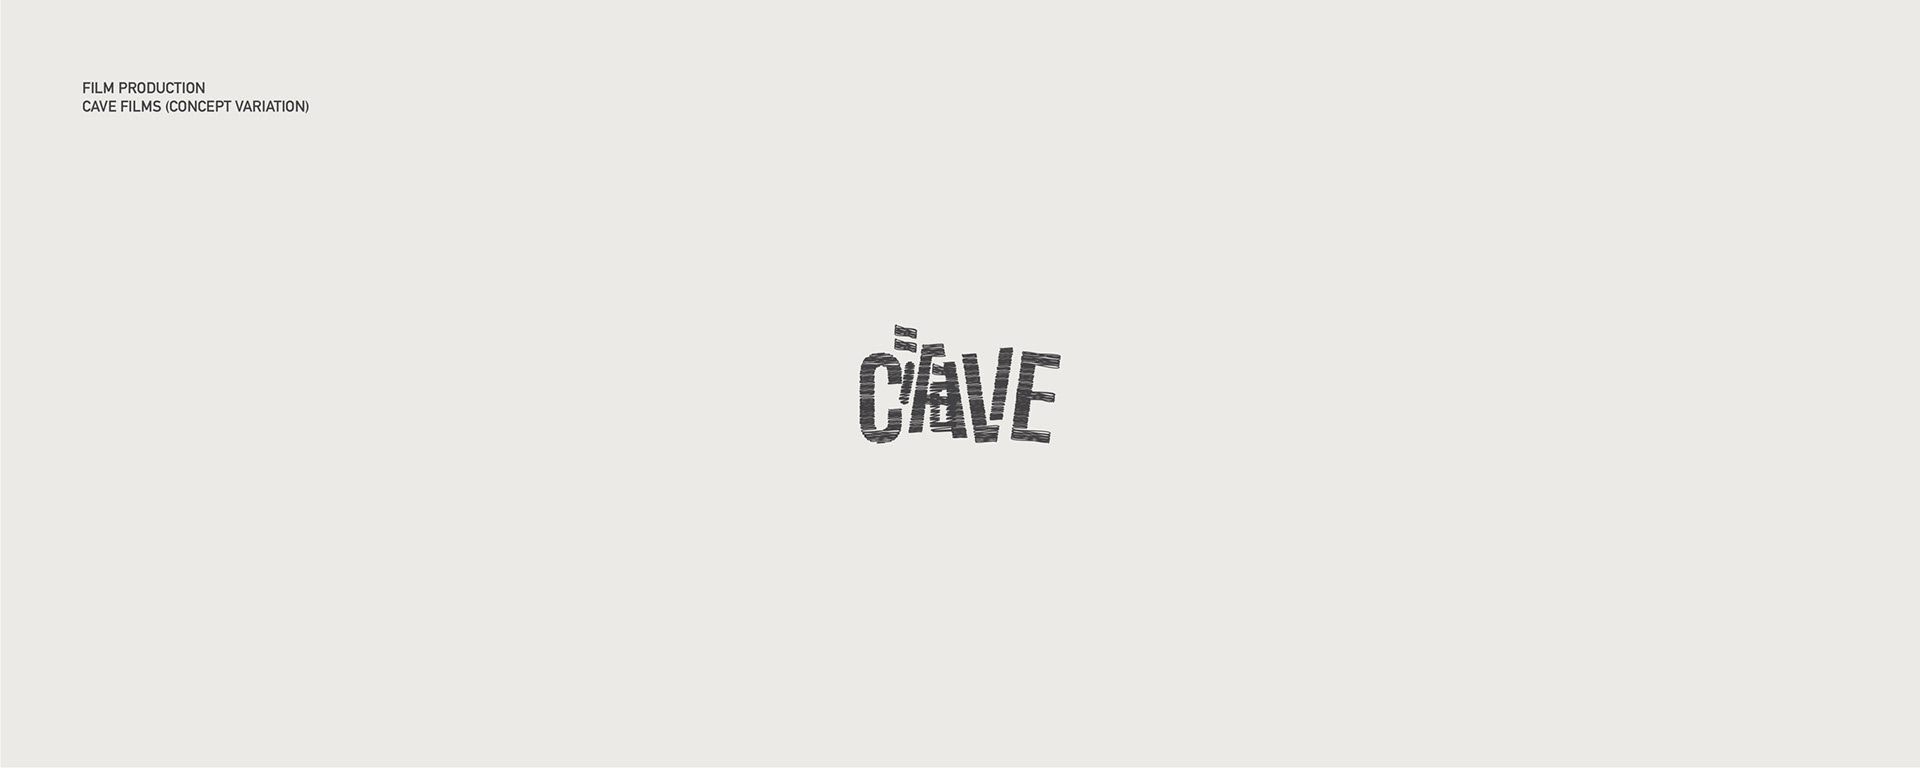 cave logo